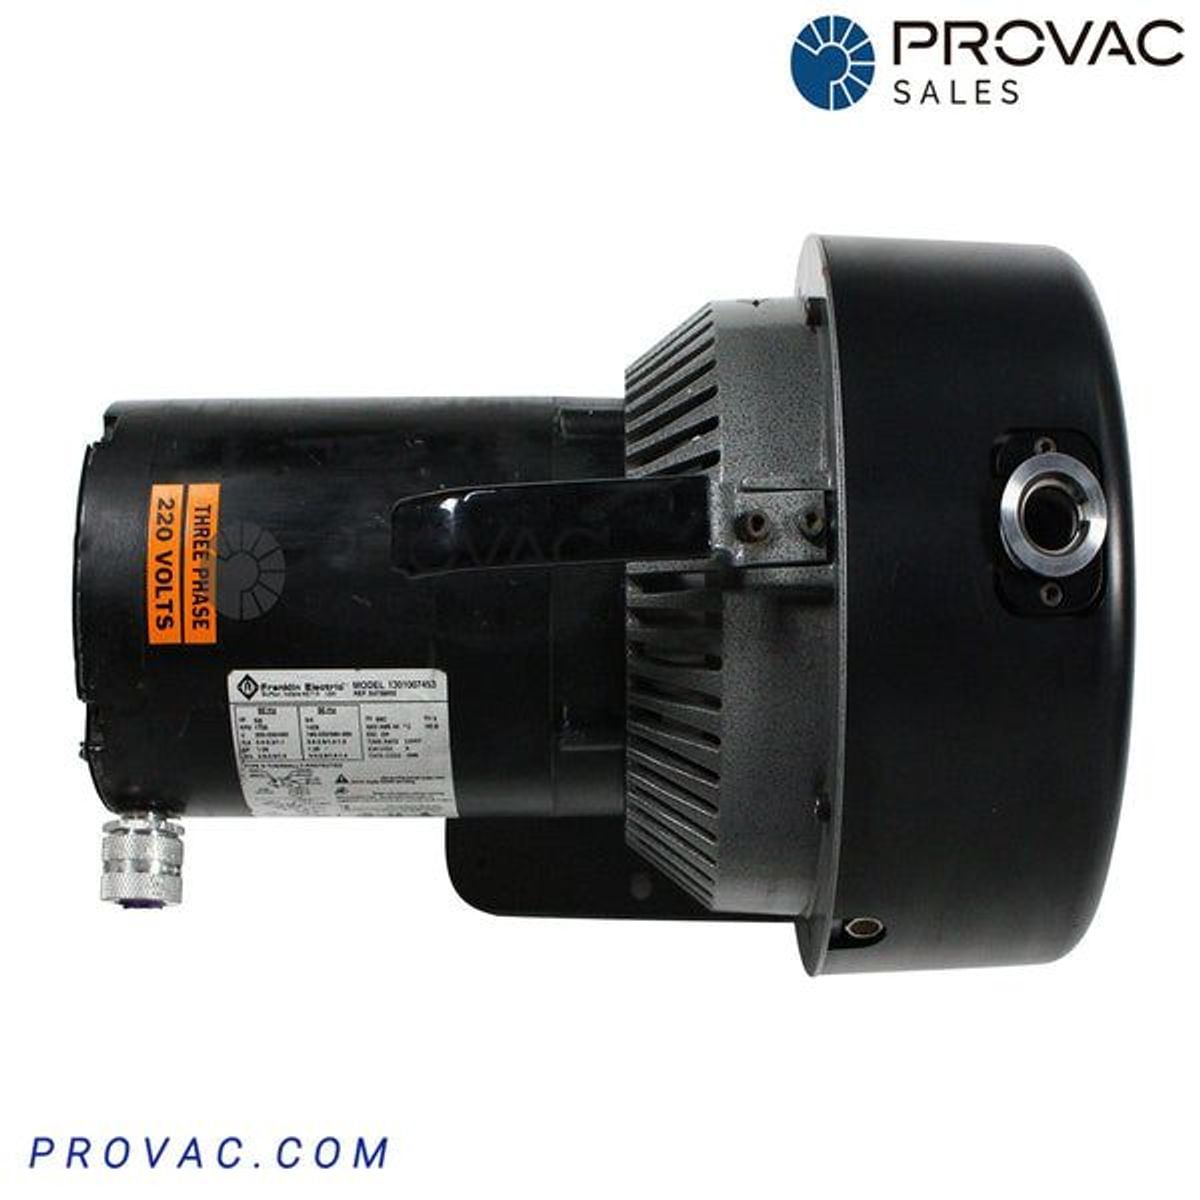 Varian PTS-300 Dry Scroll Pump, 1 Phase, Rebuilt Image 3